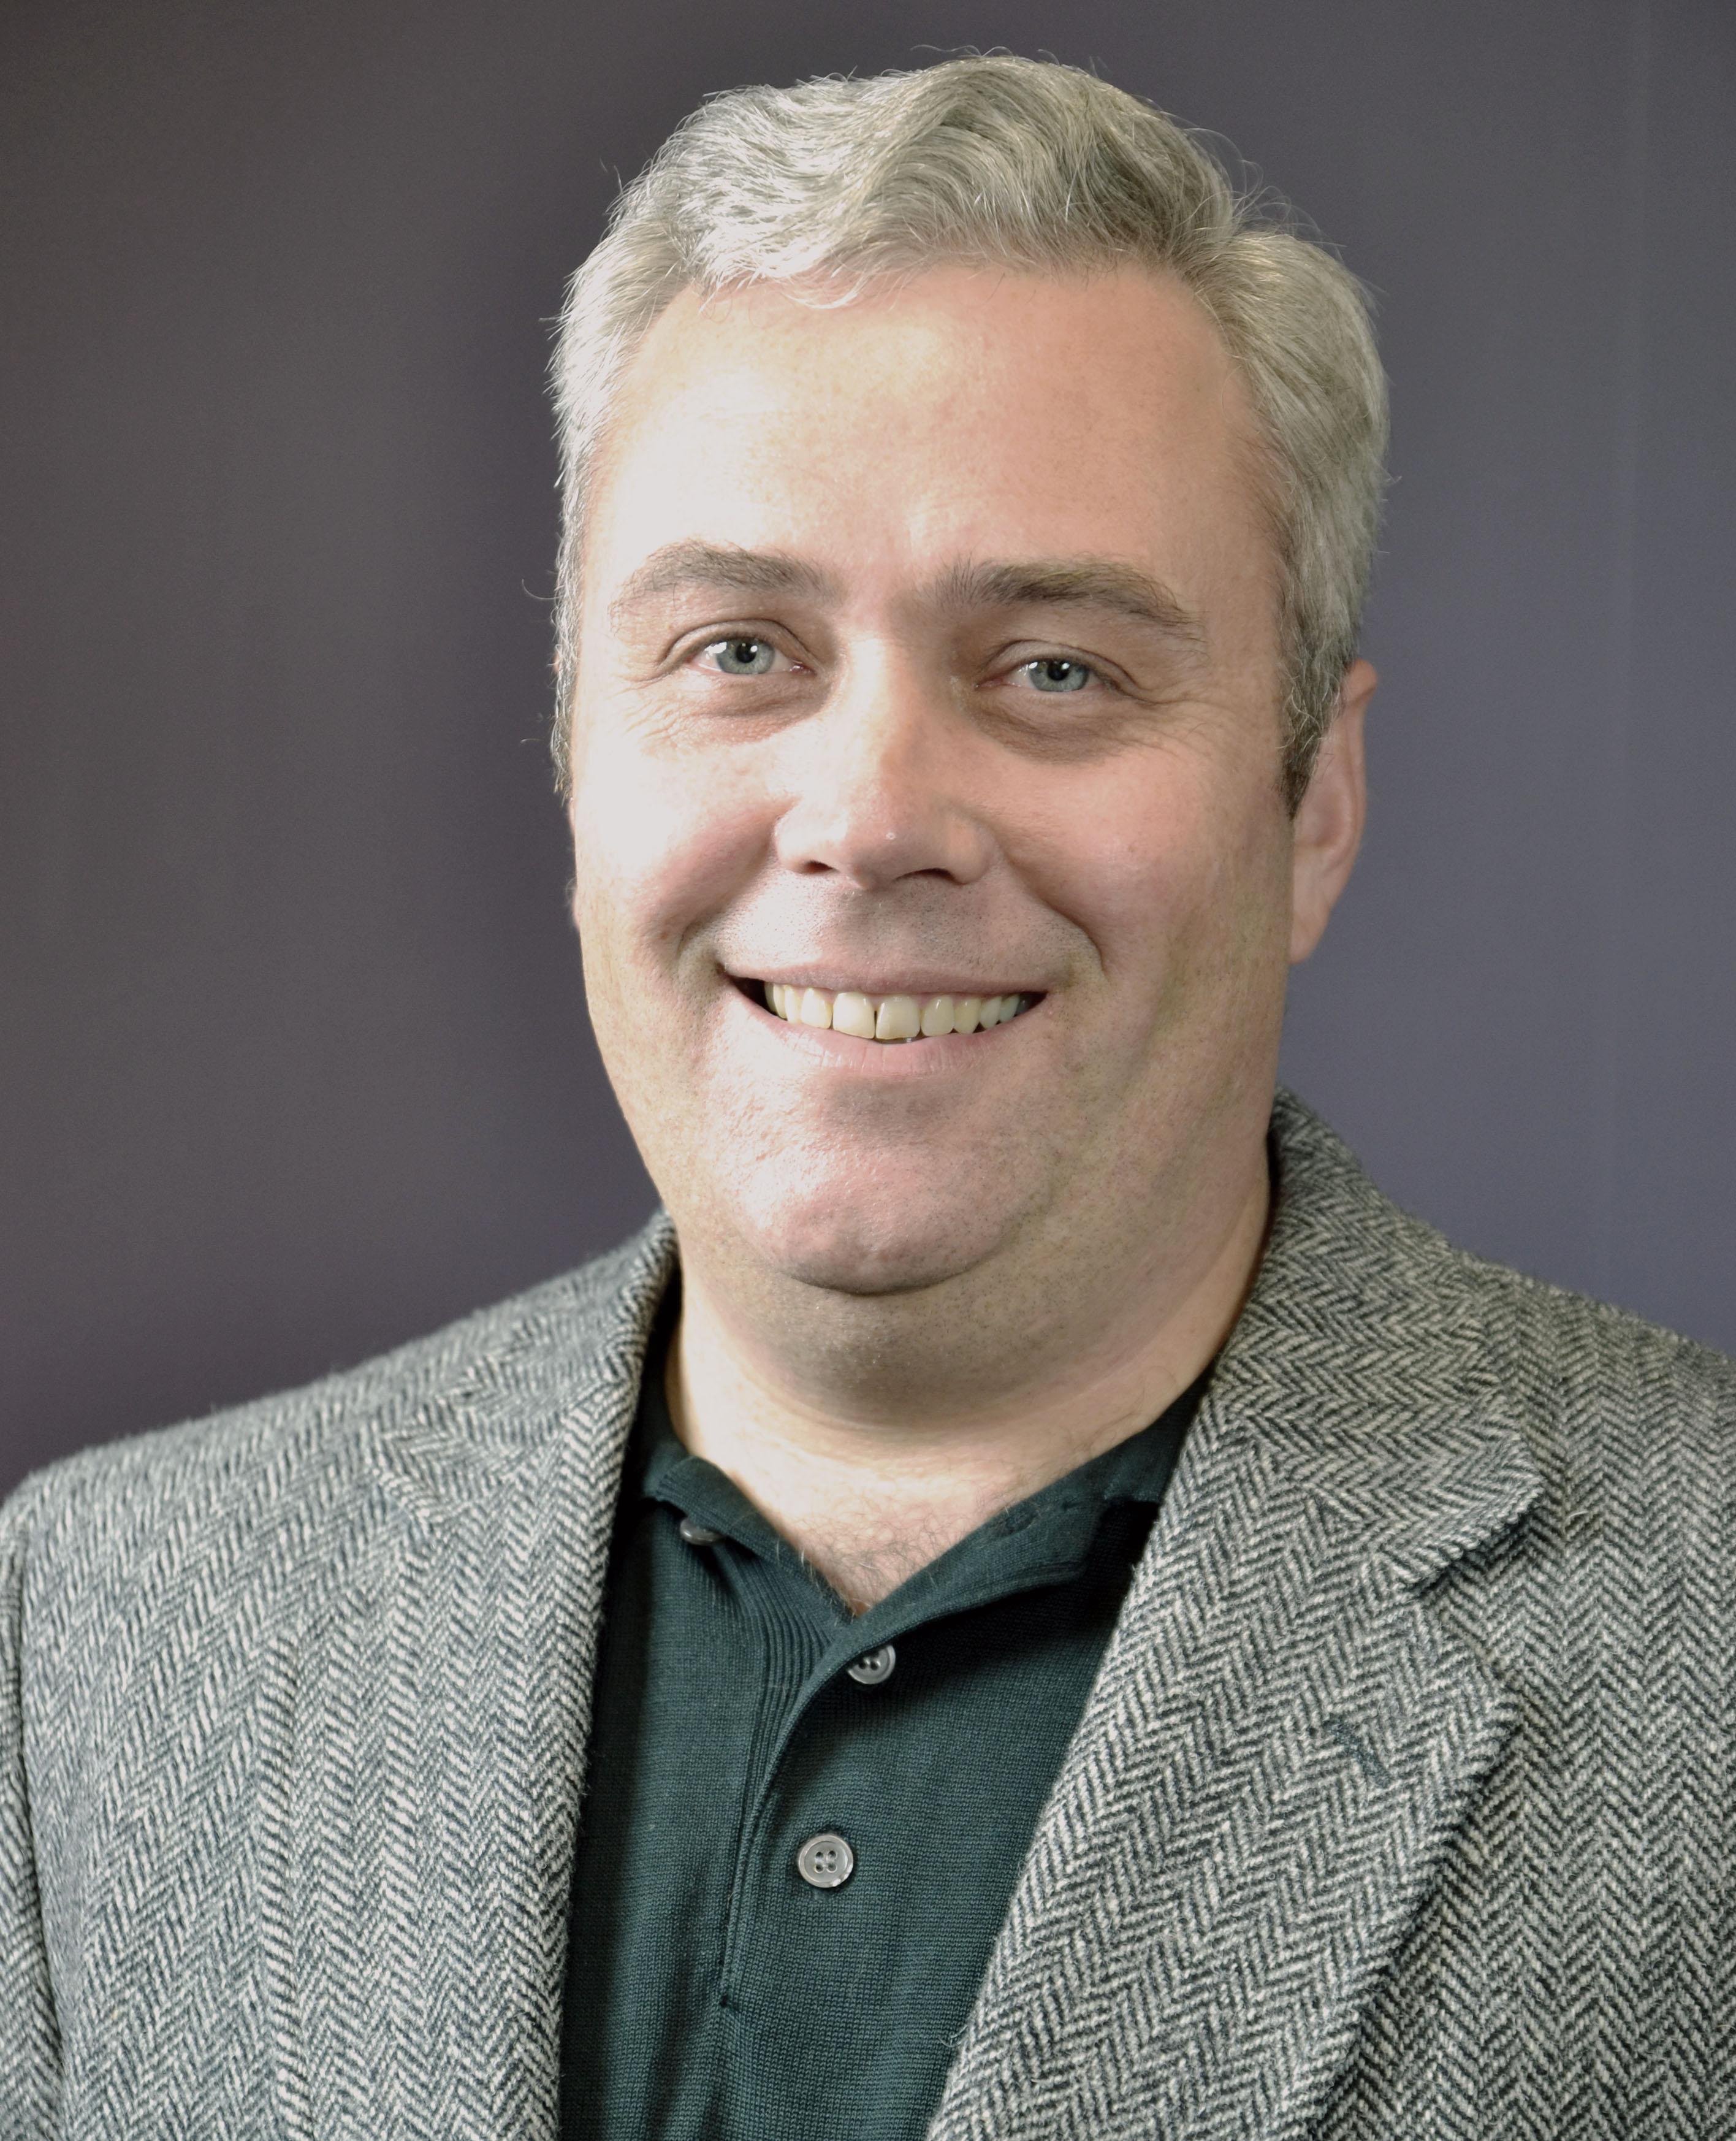 Ian Leuschner, Director for International Support Services at Virginia Tech